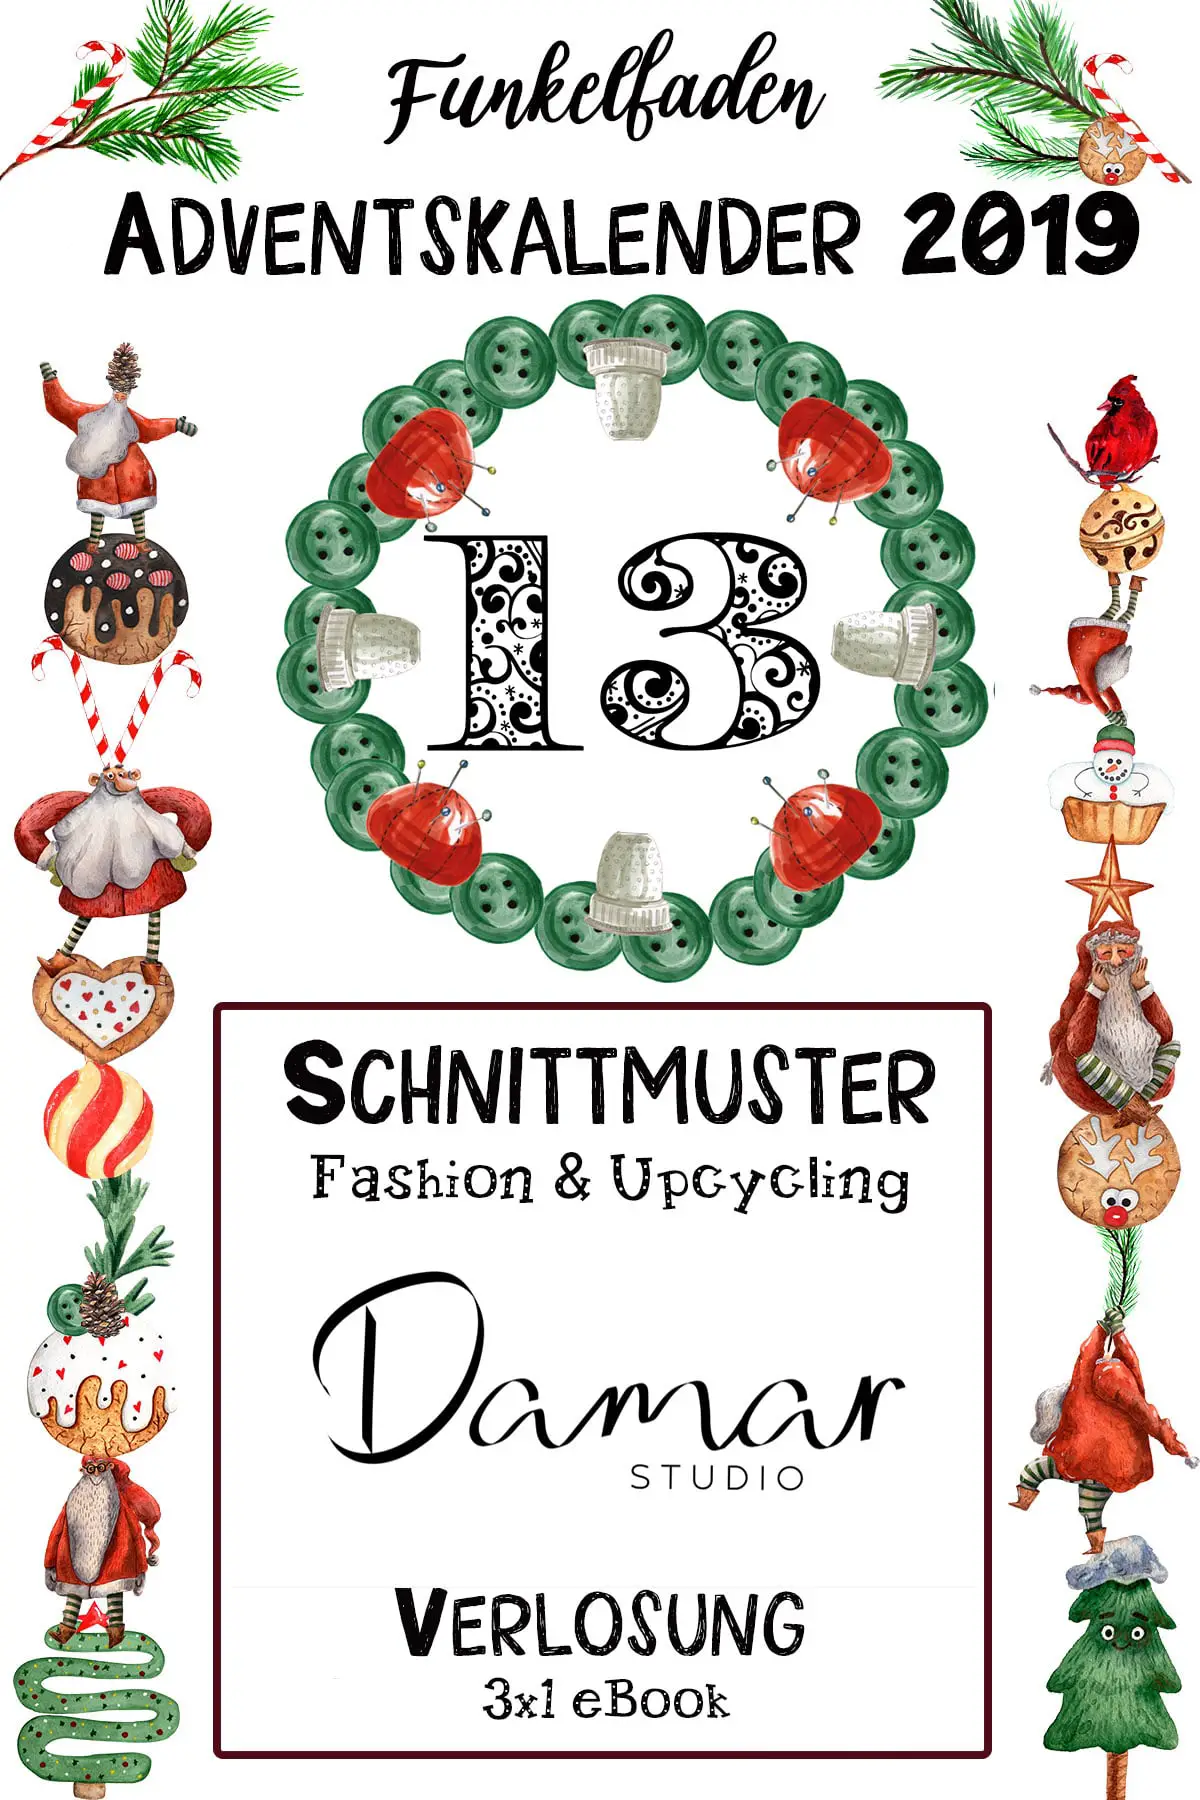 Damar Studio – Fashion Schnittmuster und Upcycling